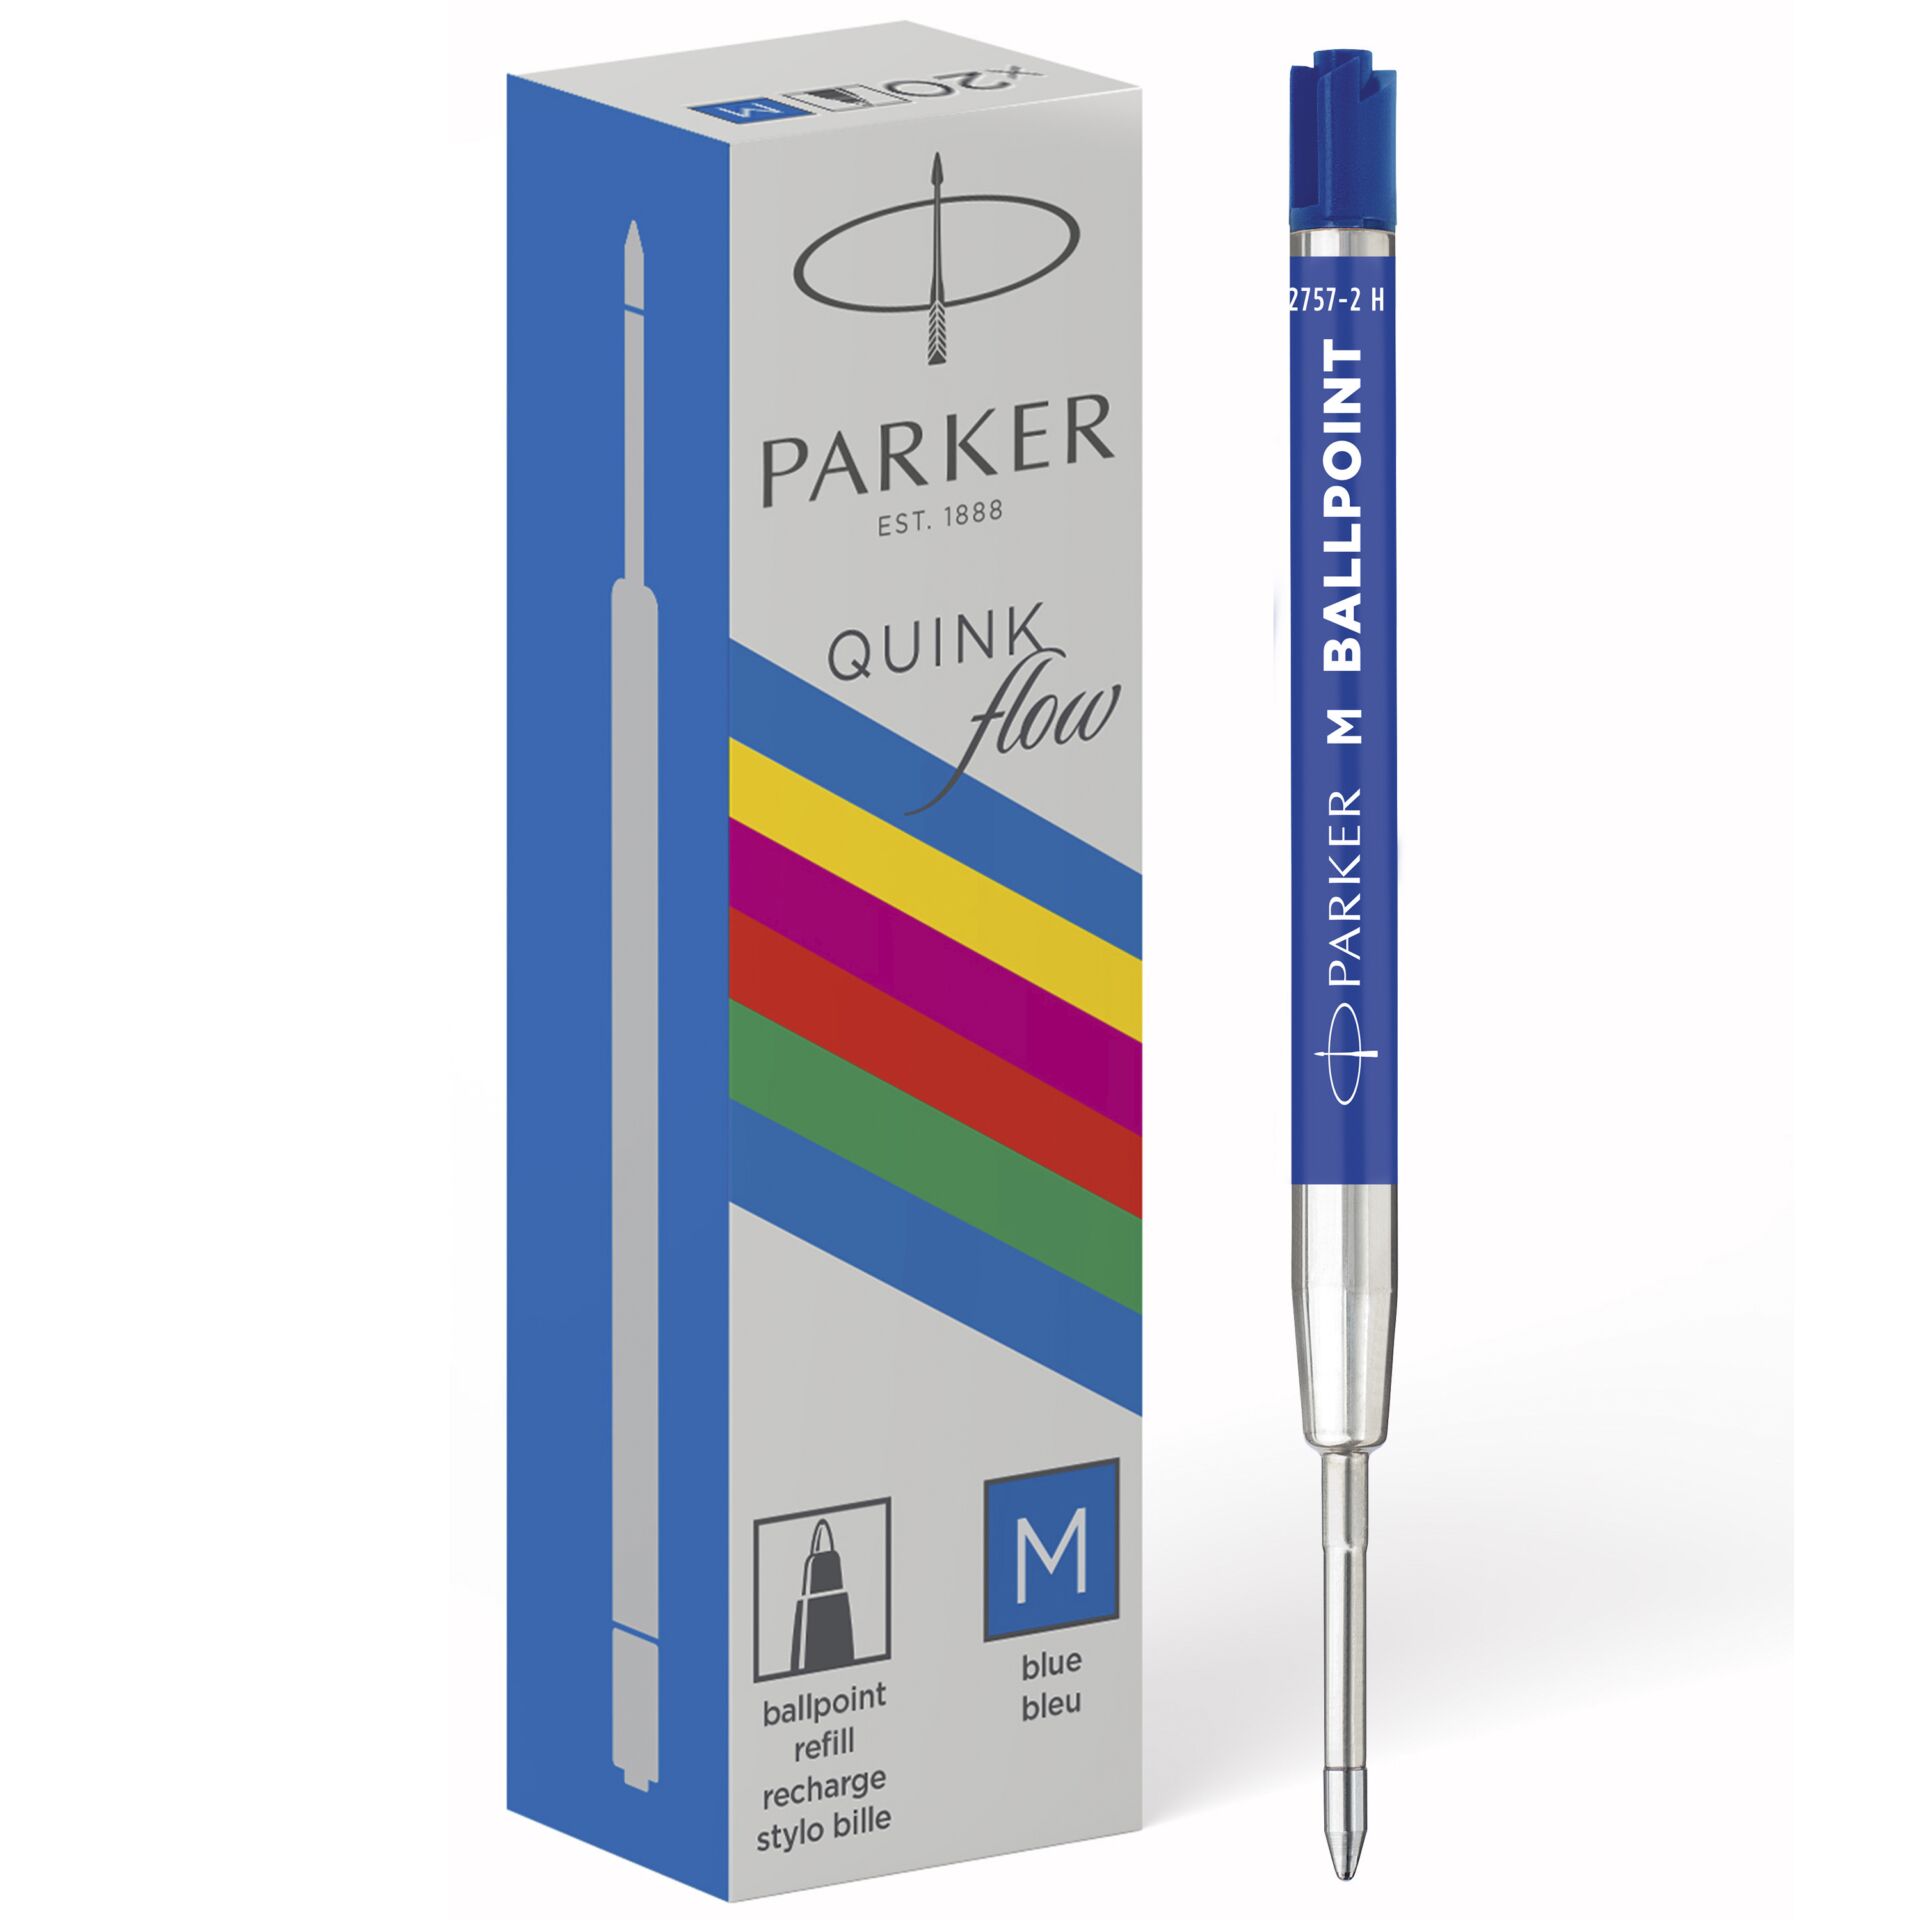 1x20 Parker Quinkflow Basic Ballpoint Pen Refill M blue